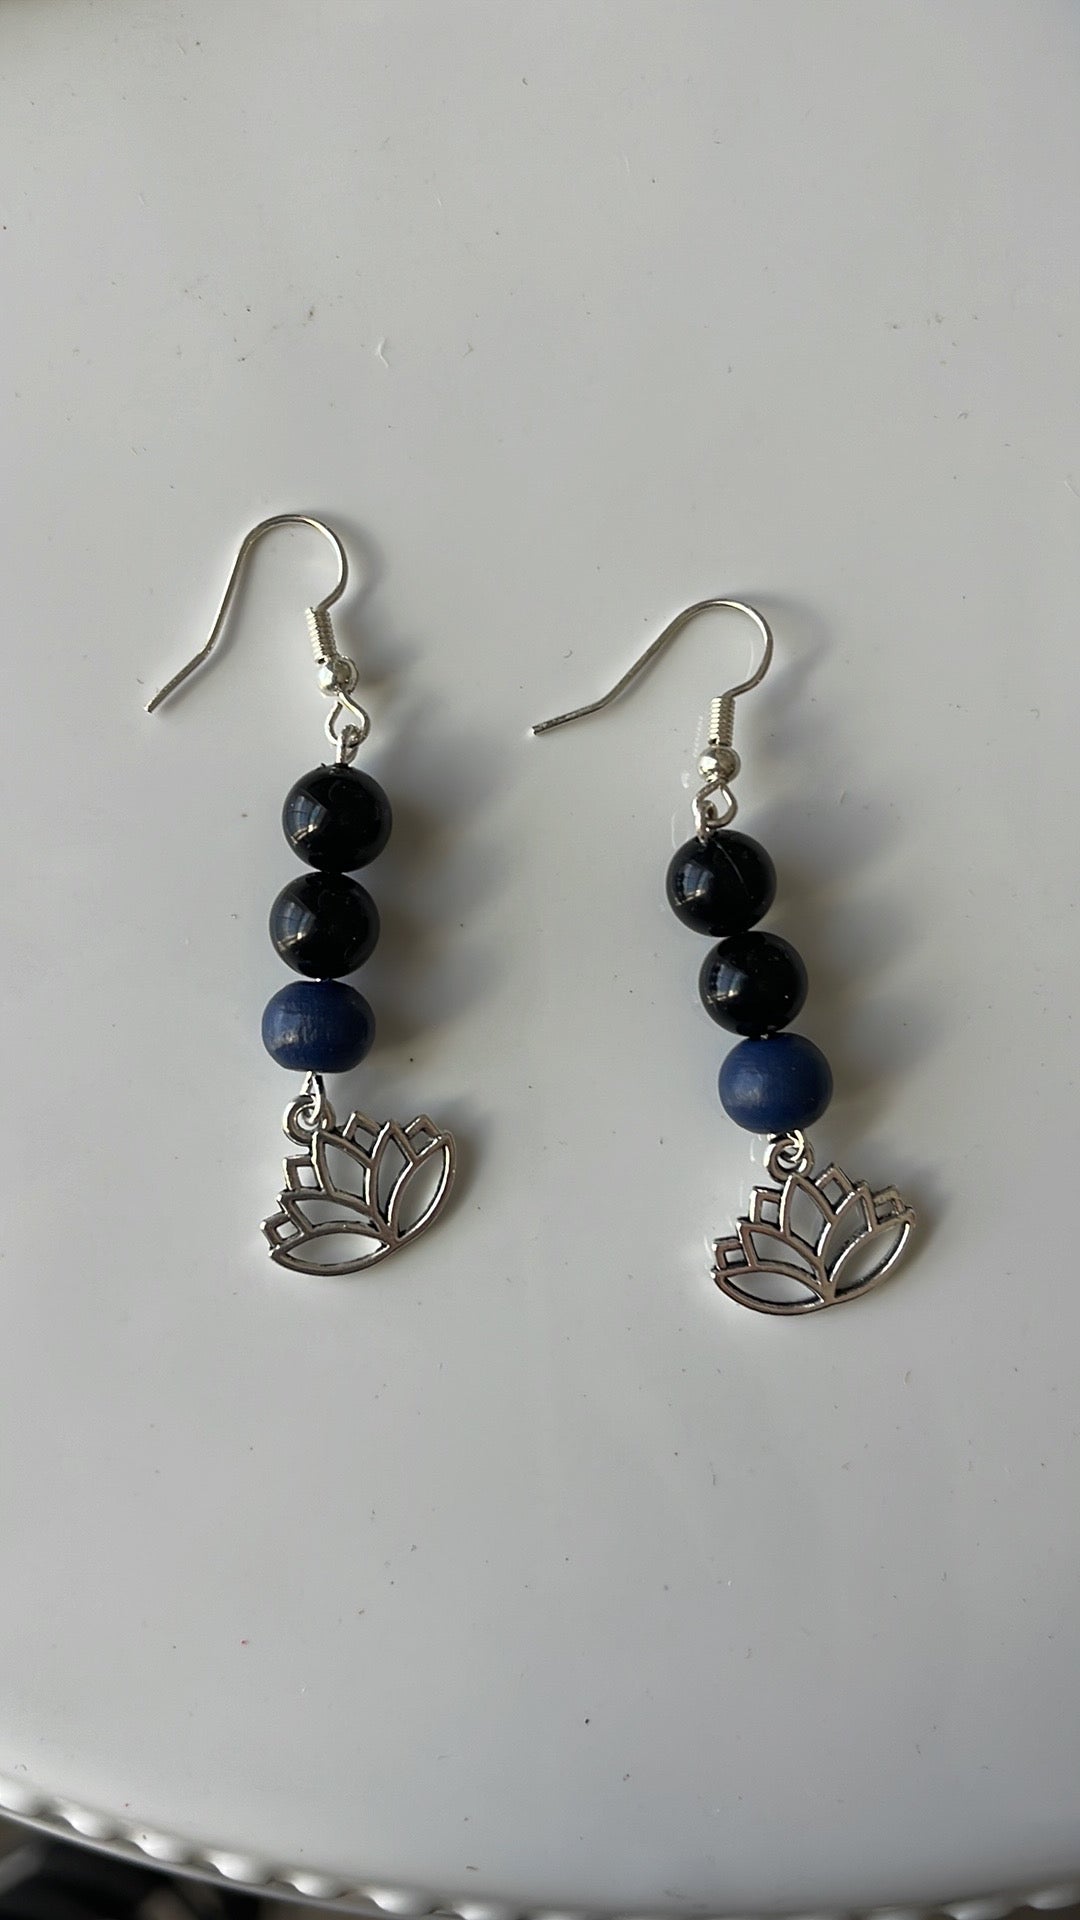 Black & Blue Jewelry Set